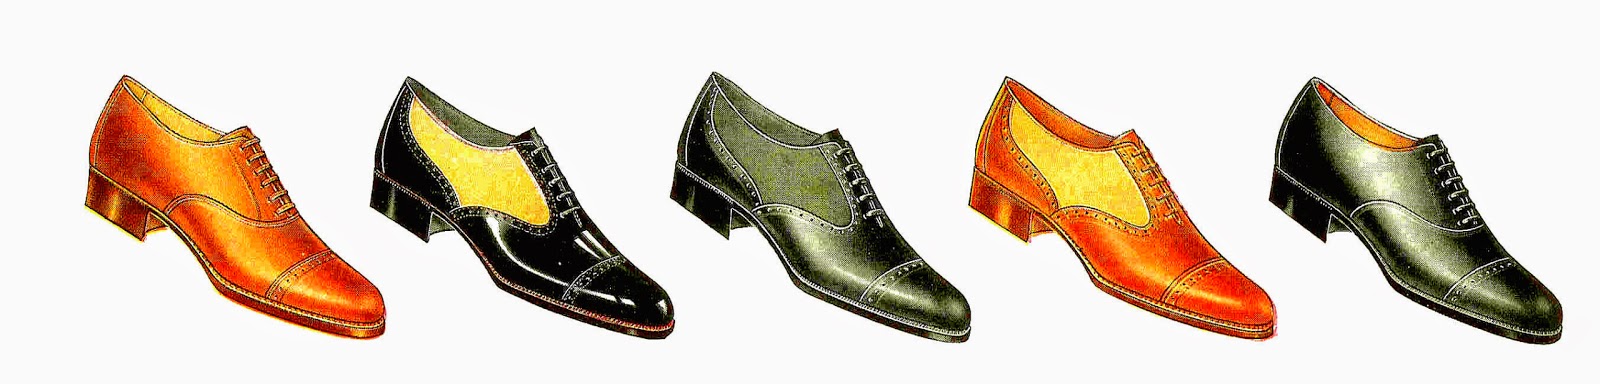 Fashion Clip Art  5 Vintage Men S Shoe Fashion Graphics Border Design